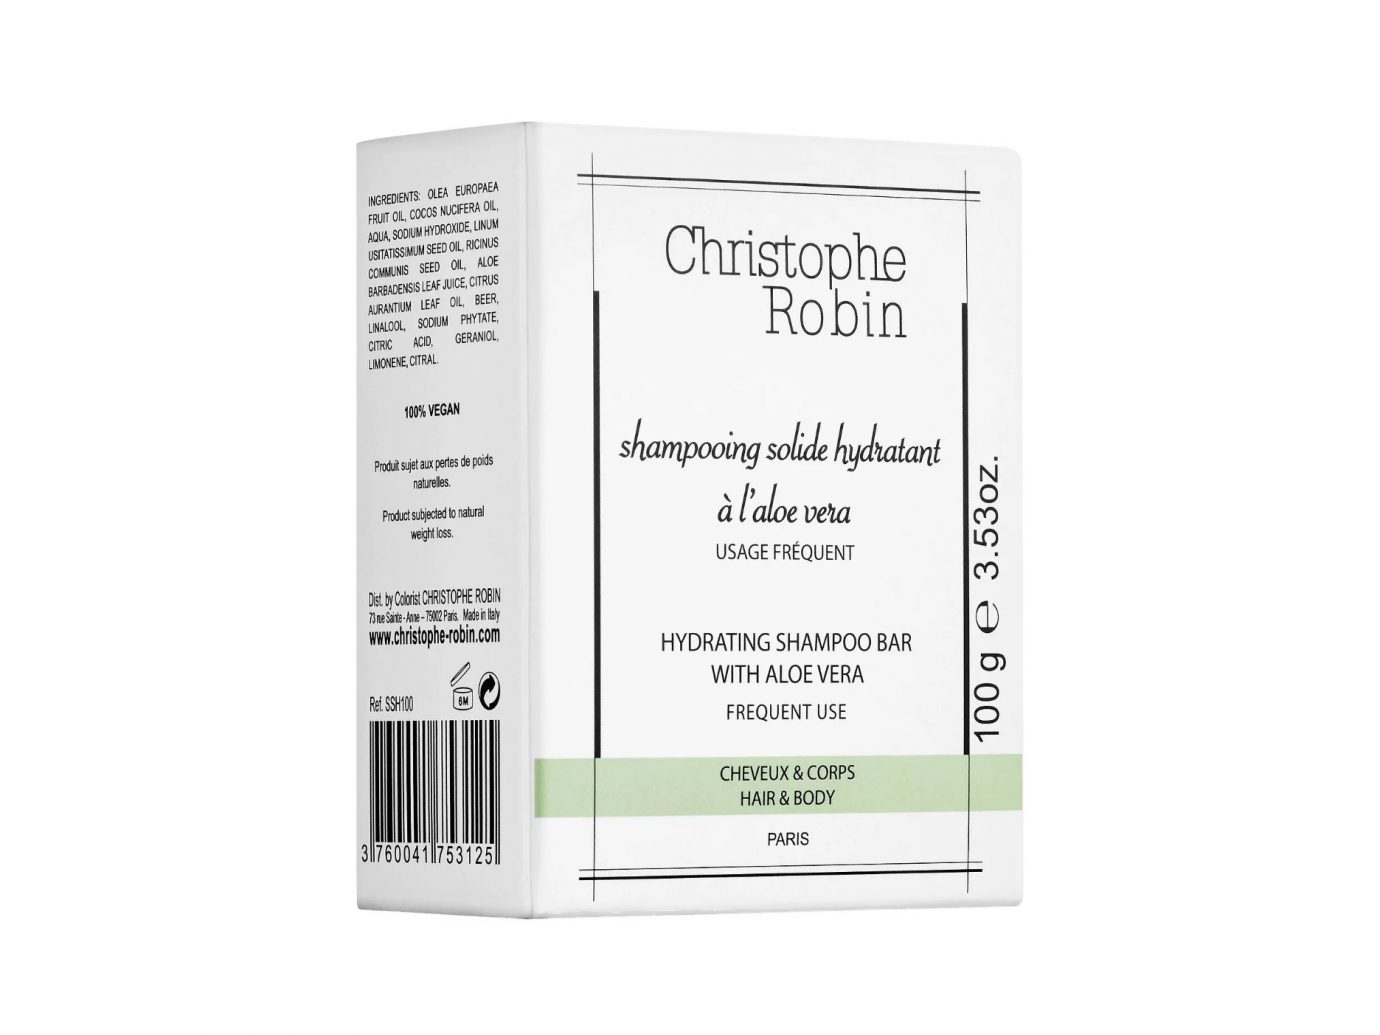 Christophe Robin Hydrating Shampoo Hair and Body Bar